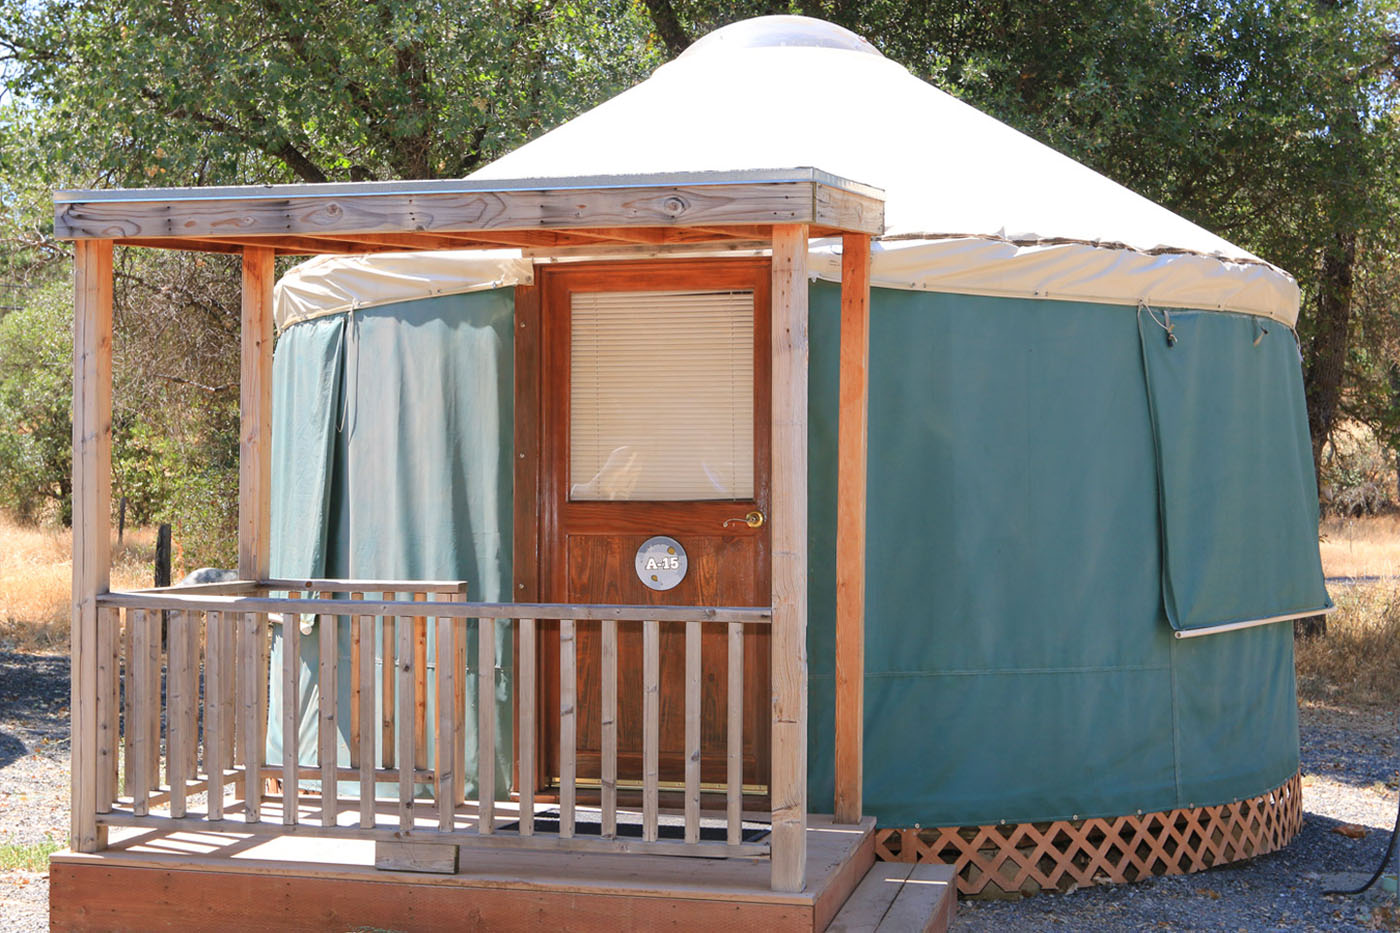 Yosemite Area Yurt Camping